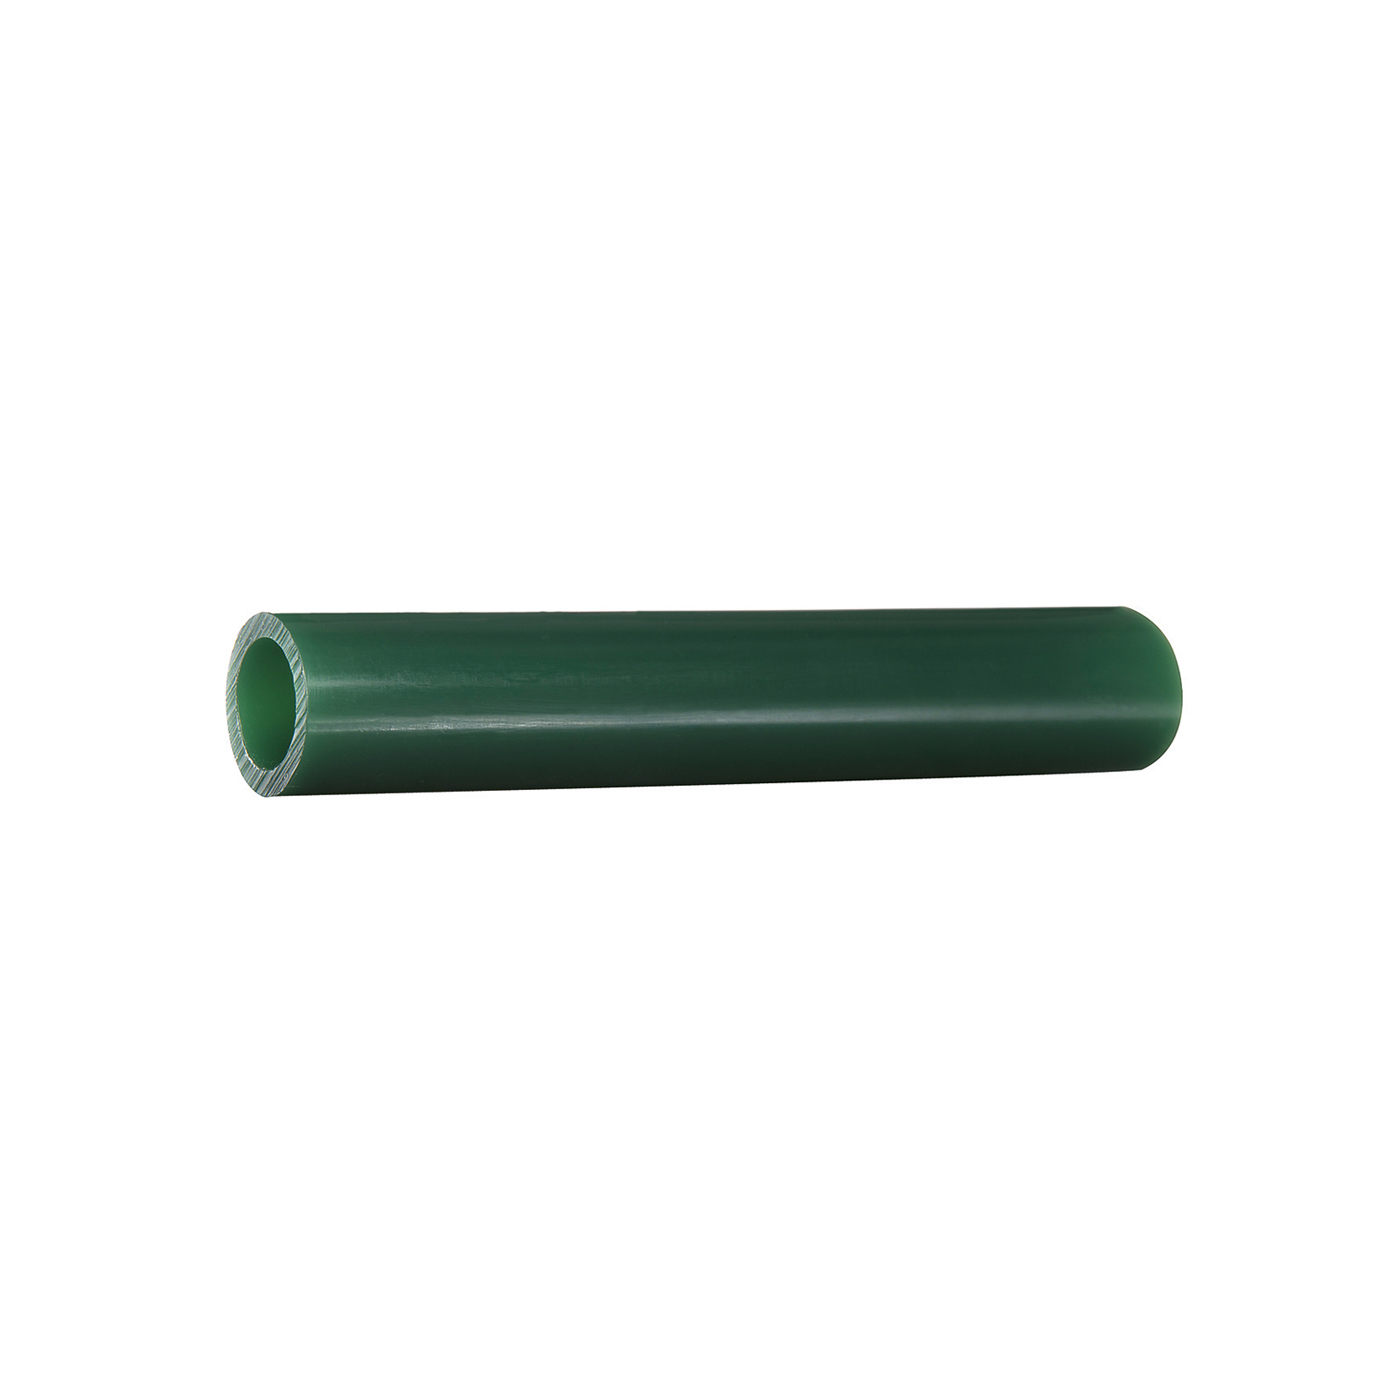 Wax Profile, Round, Green, Centric, Holl., 22.2x15.8x152.4mm - 1 piece